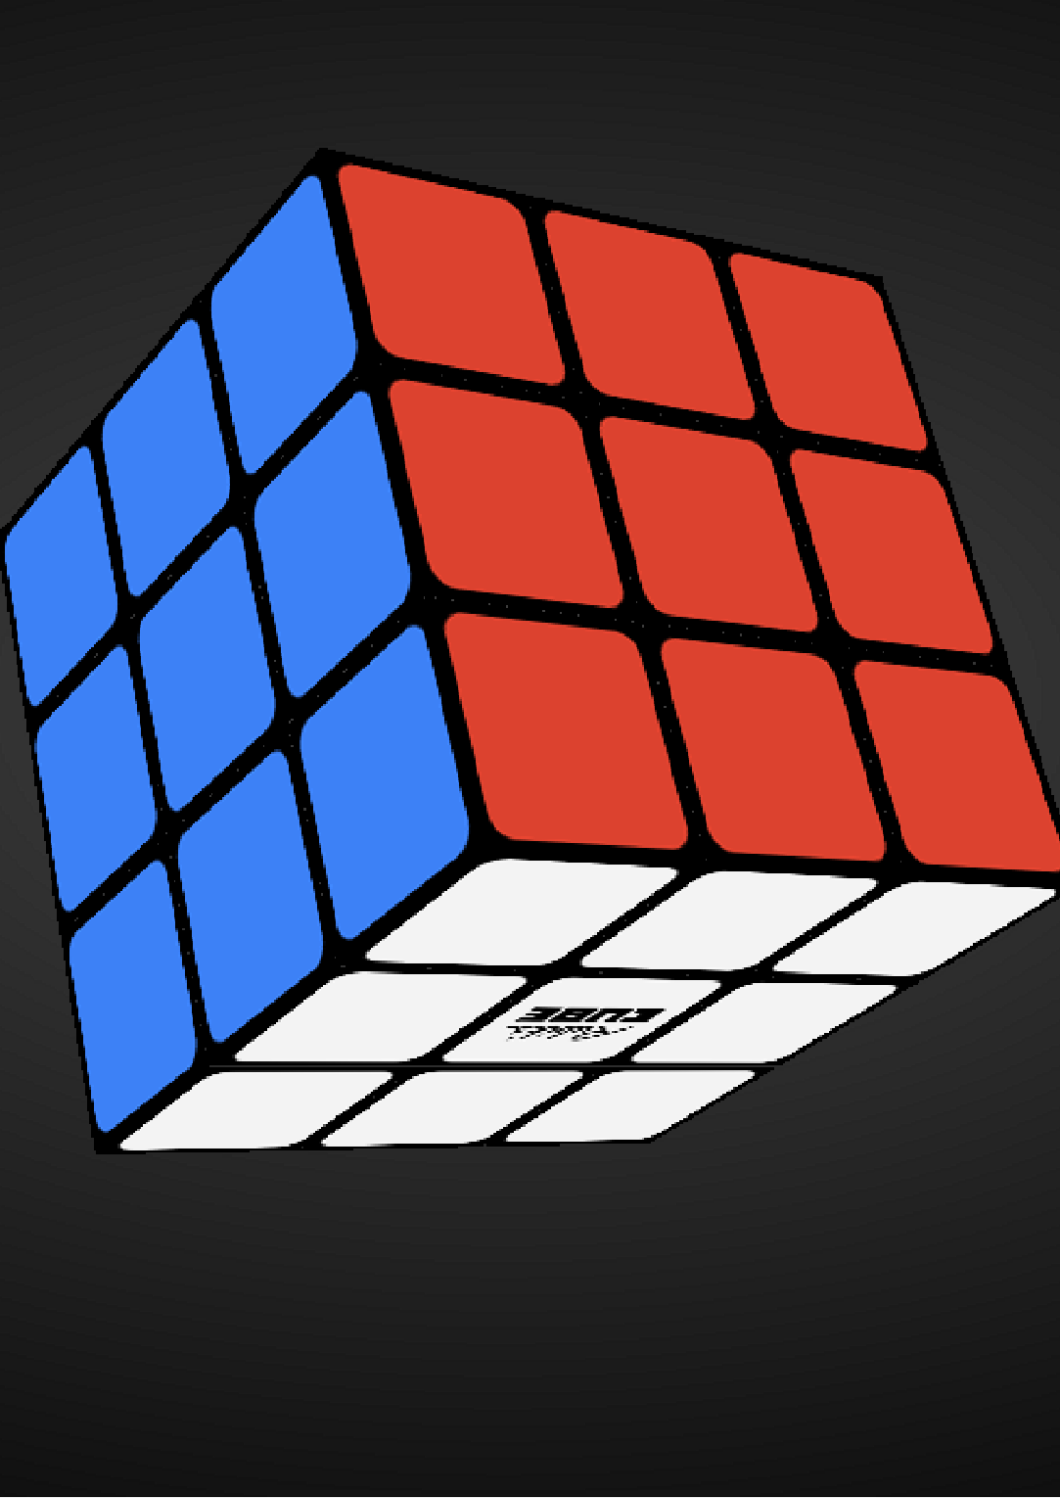 Applying algorithms to solve a Rubik’s